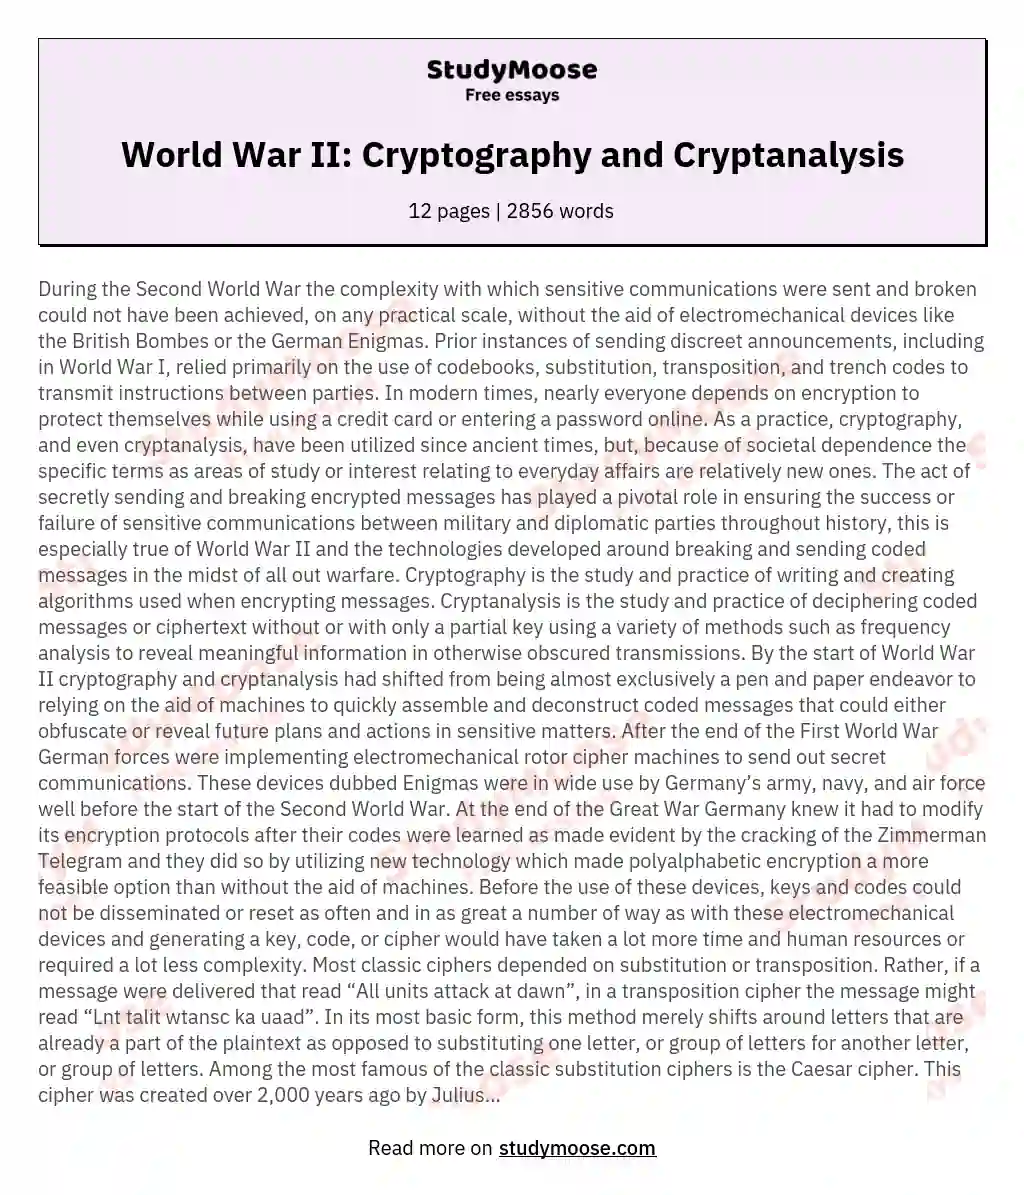 World War II: Сryptography and Сryptanalysis essay